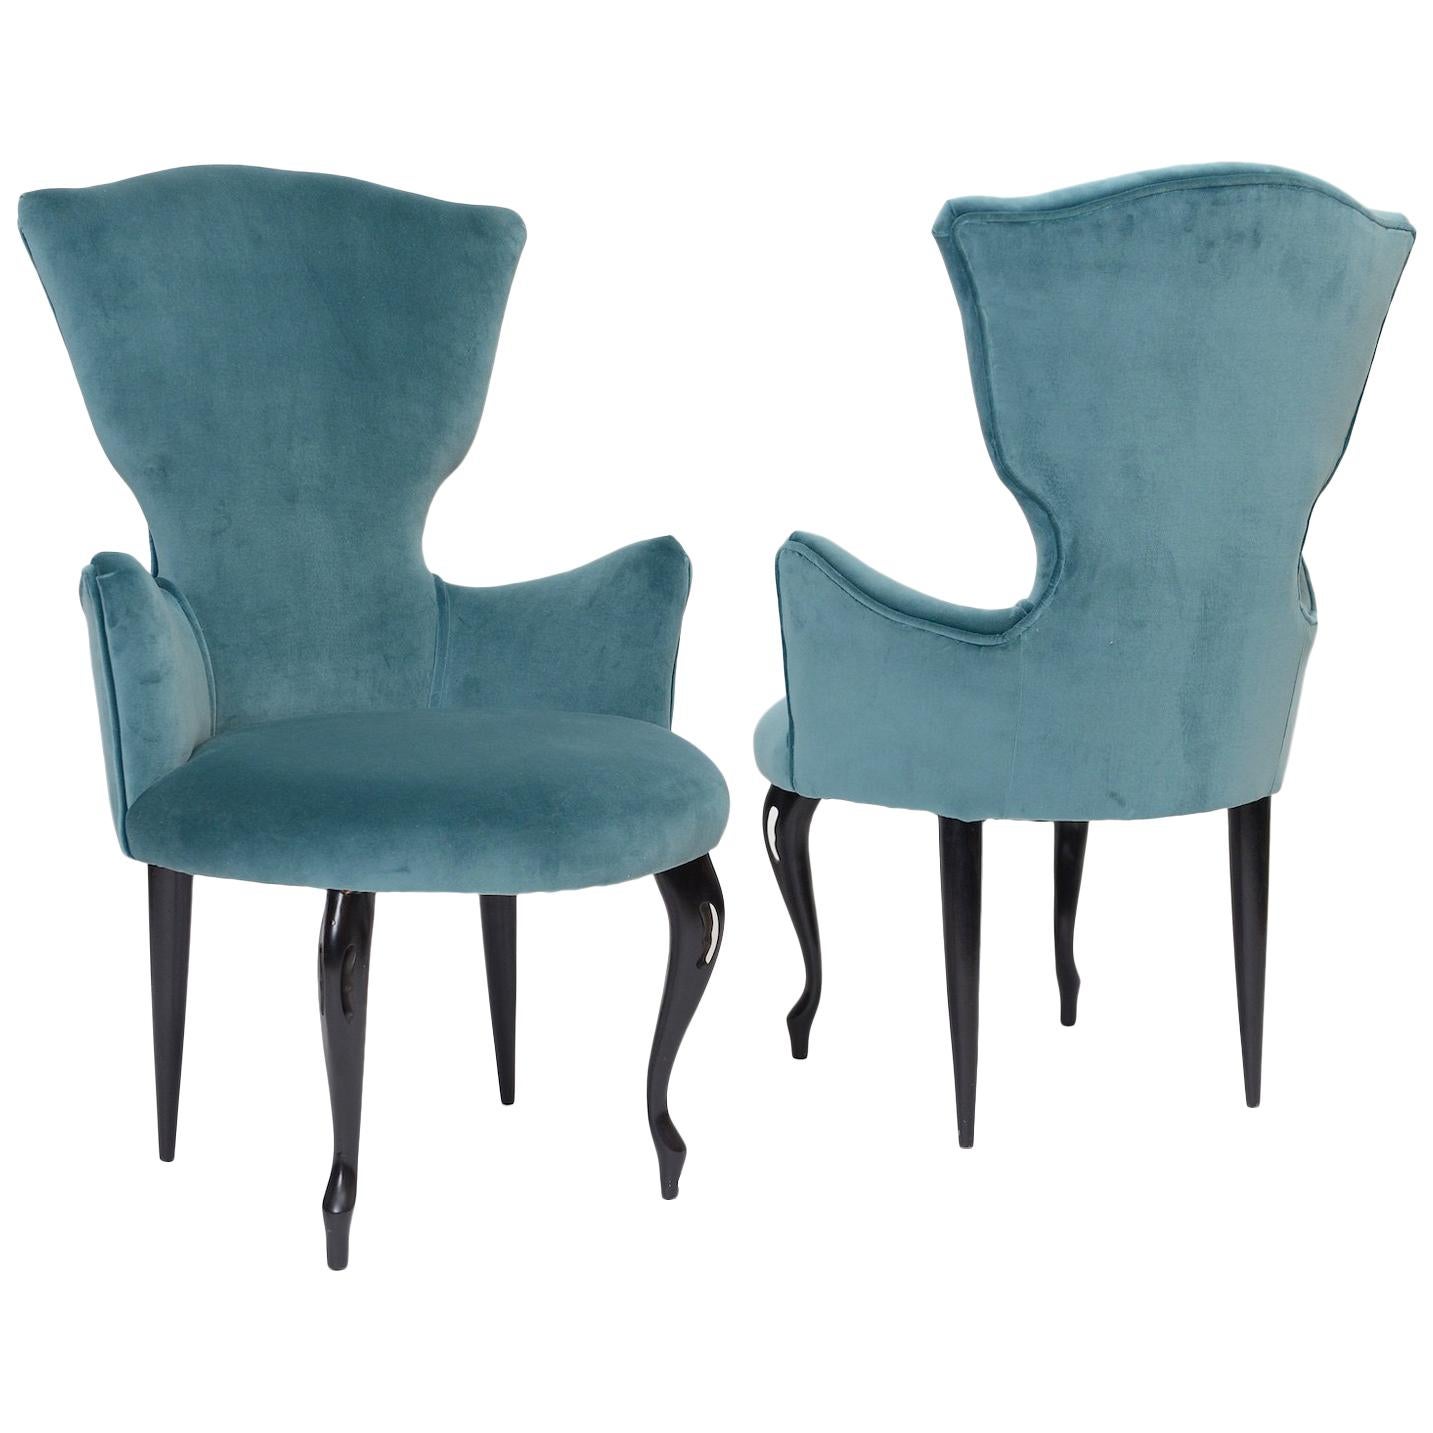 Small Pair of Italian 1950s Chairs in Blue Velvet